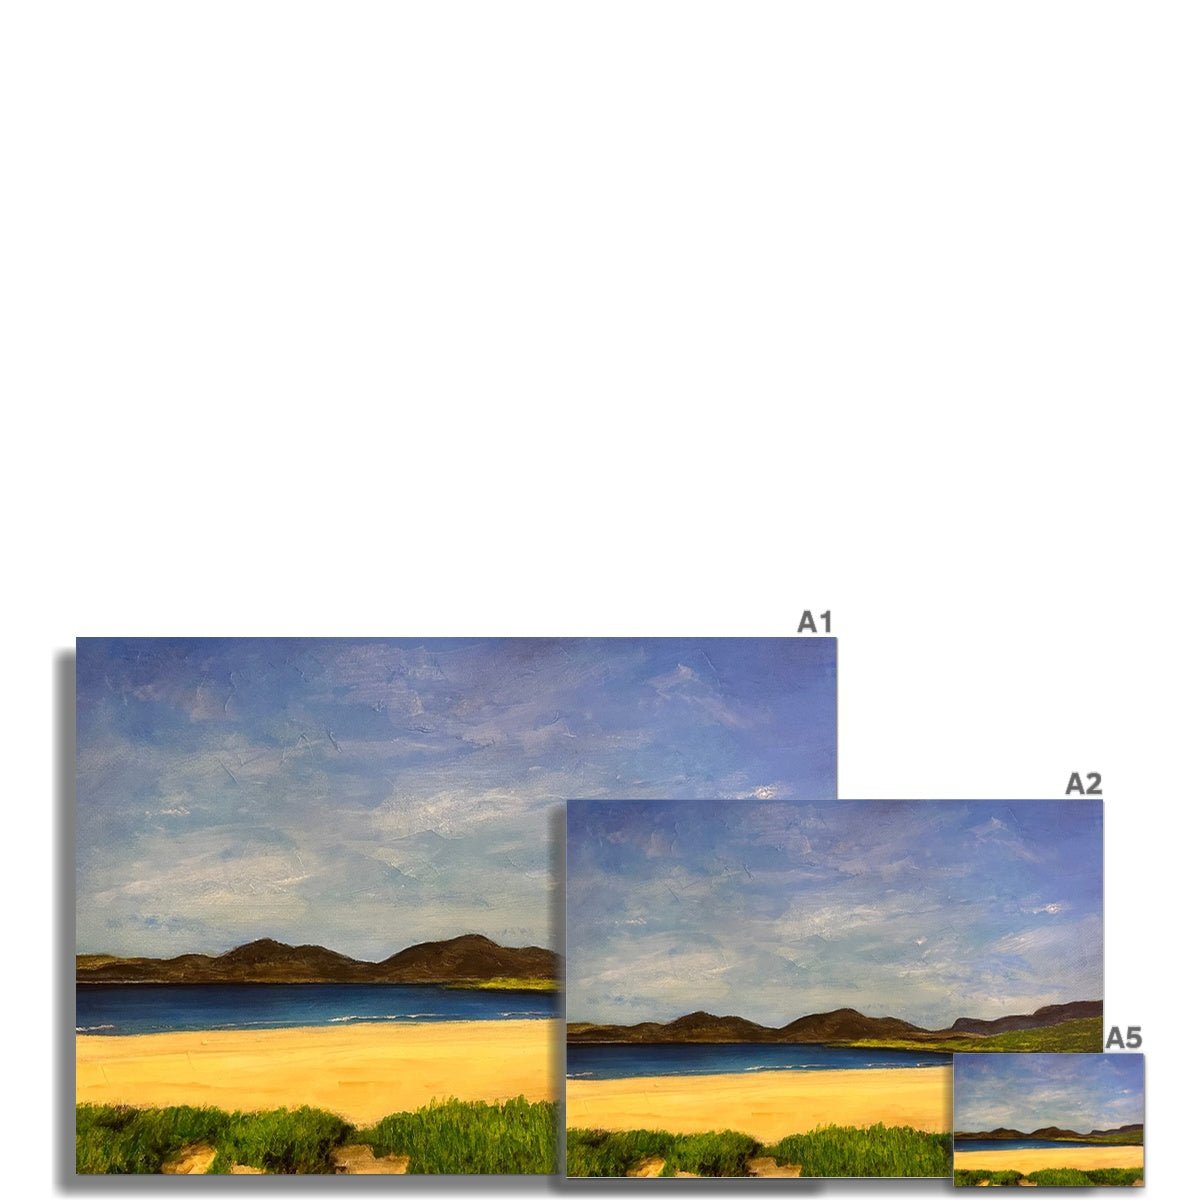 Luskentyre Beach Harris Painting | Fine Art Prints From Scotland-Unframed Prints-Hebridean Islands Art Gallery-Paintings, Prints, Homeware, Art Gifts From Scotland By Scottish Artist Kevin Hunter